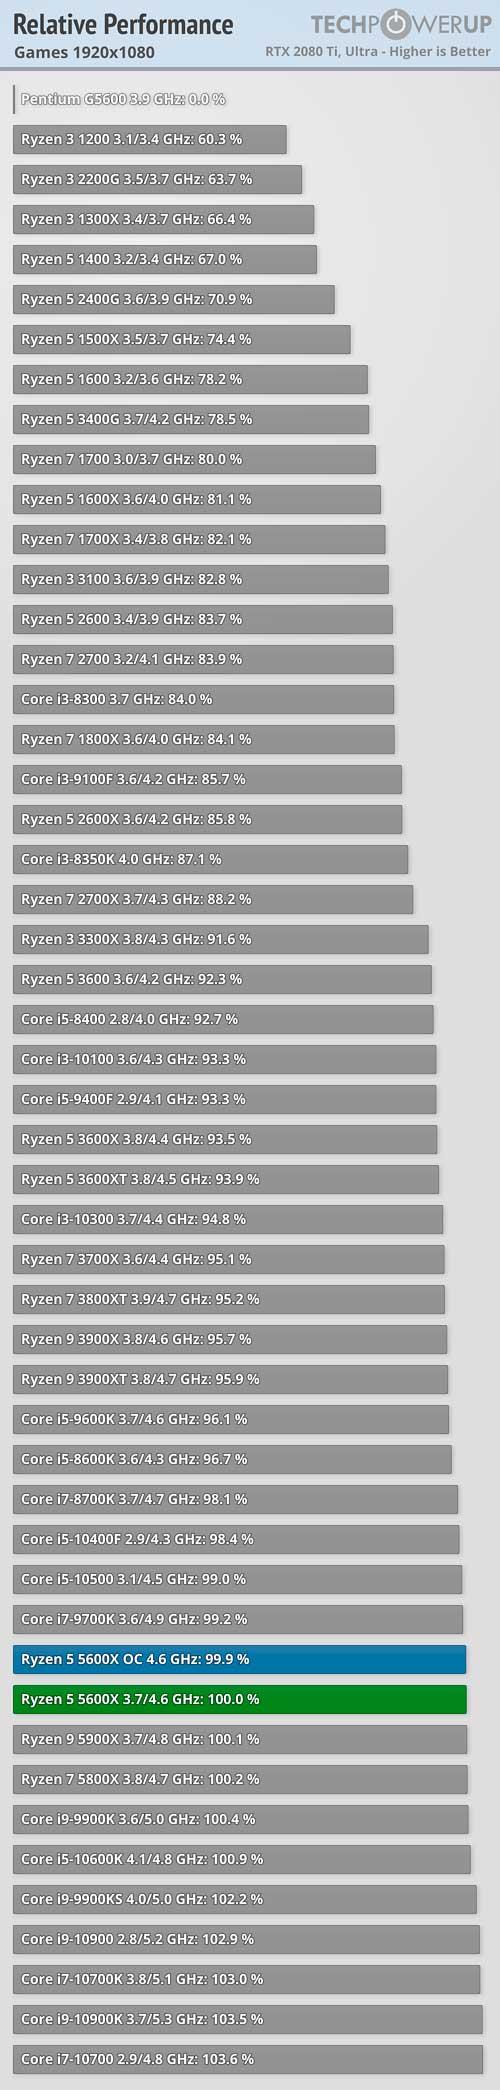 relative-performance-games-1920-1080-Ryzen-5-5600X